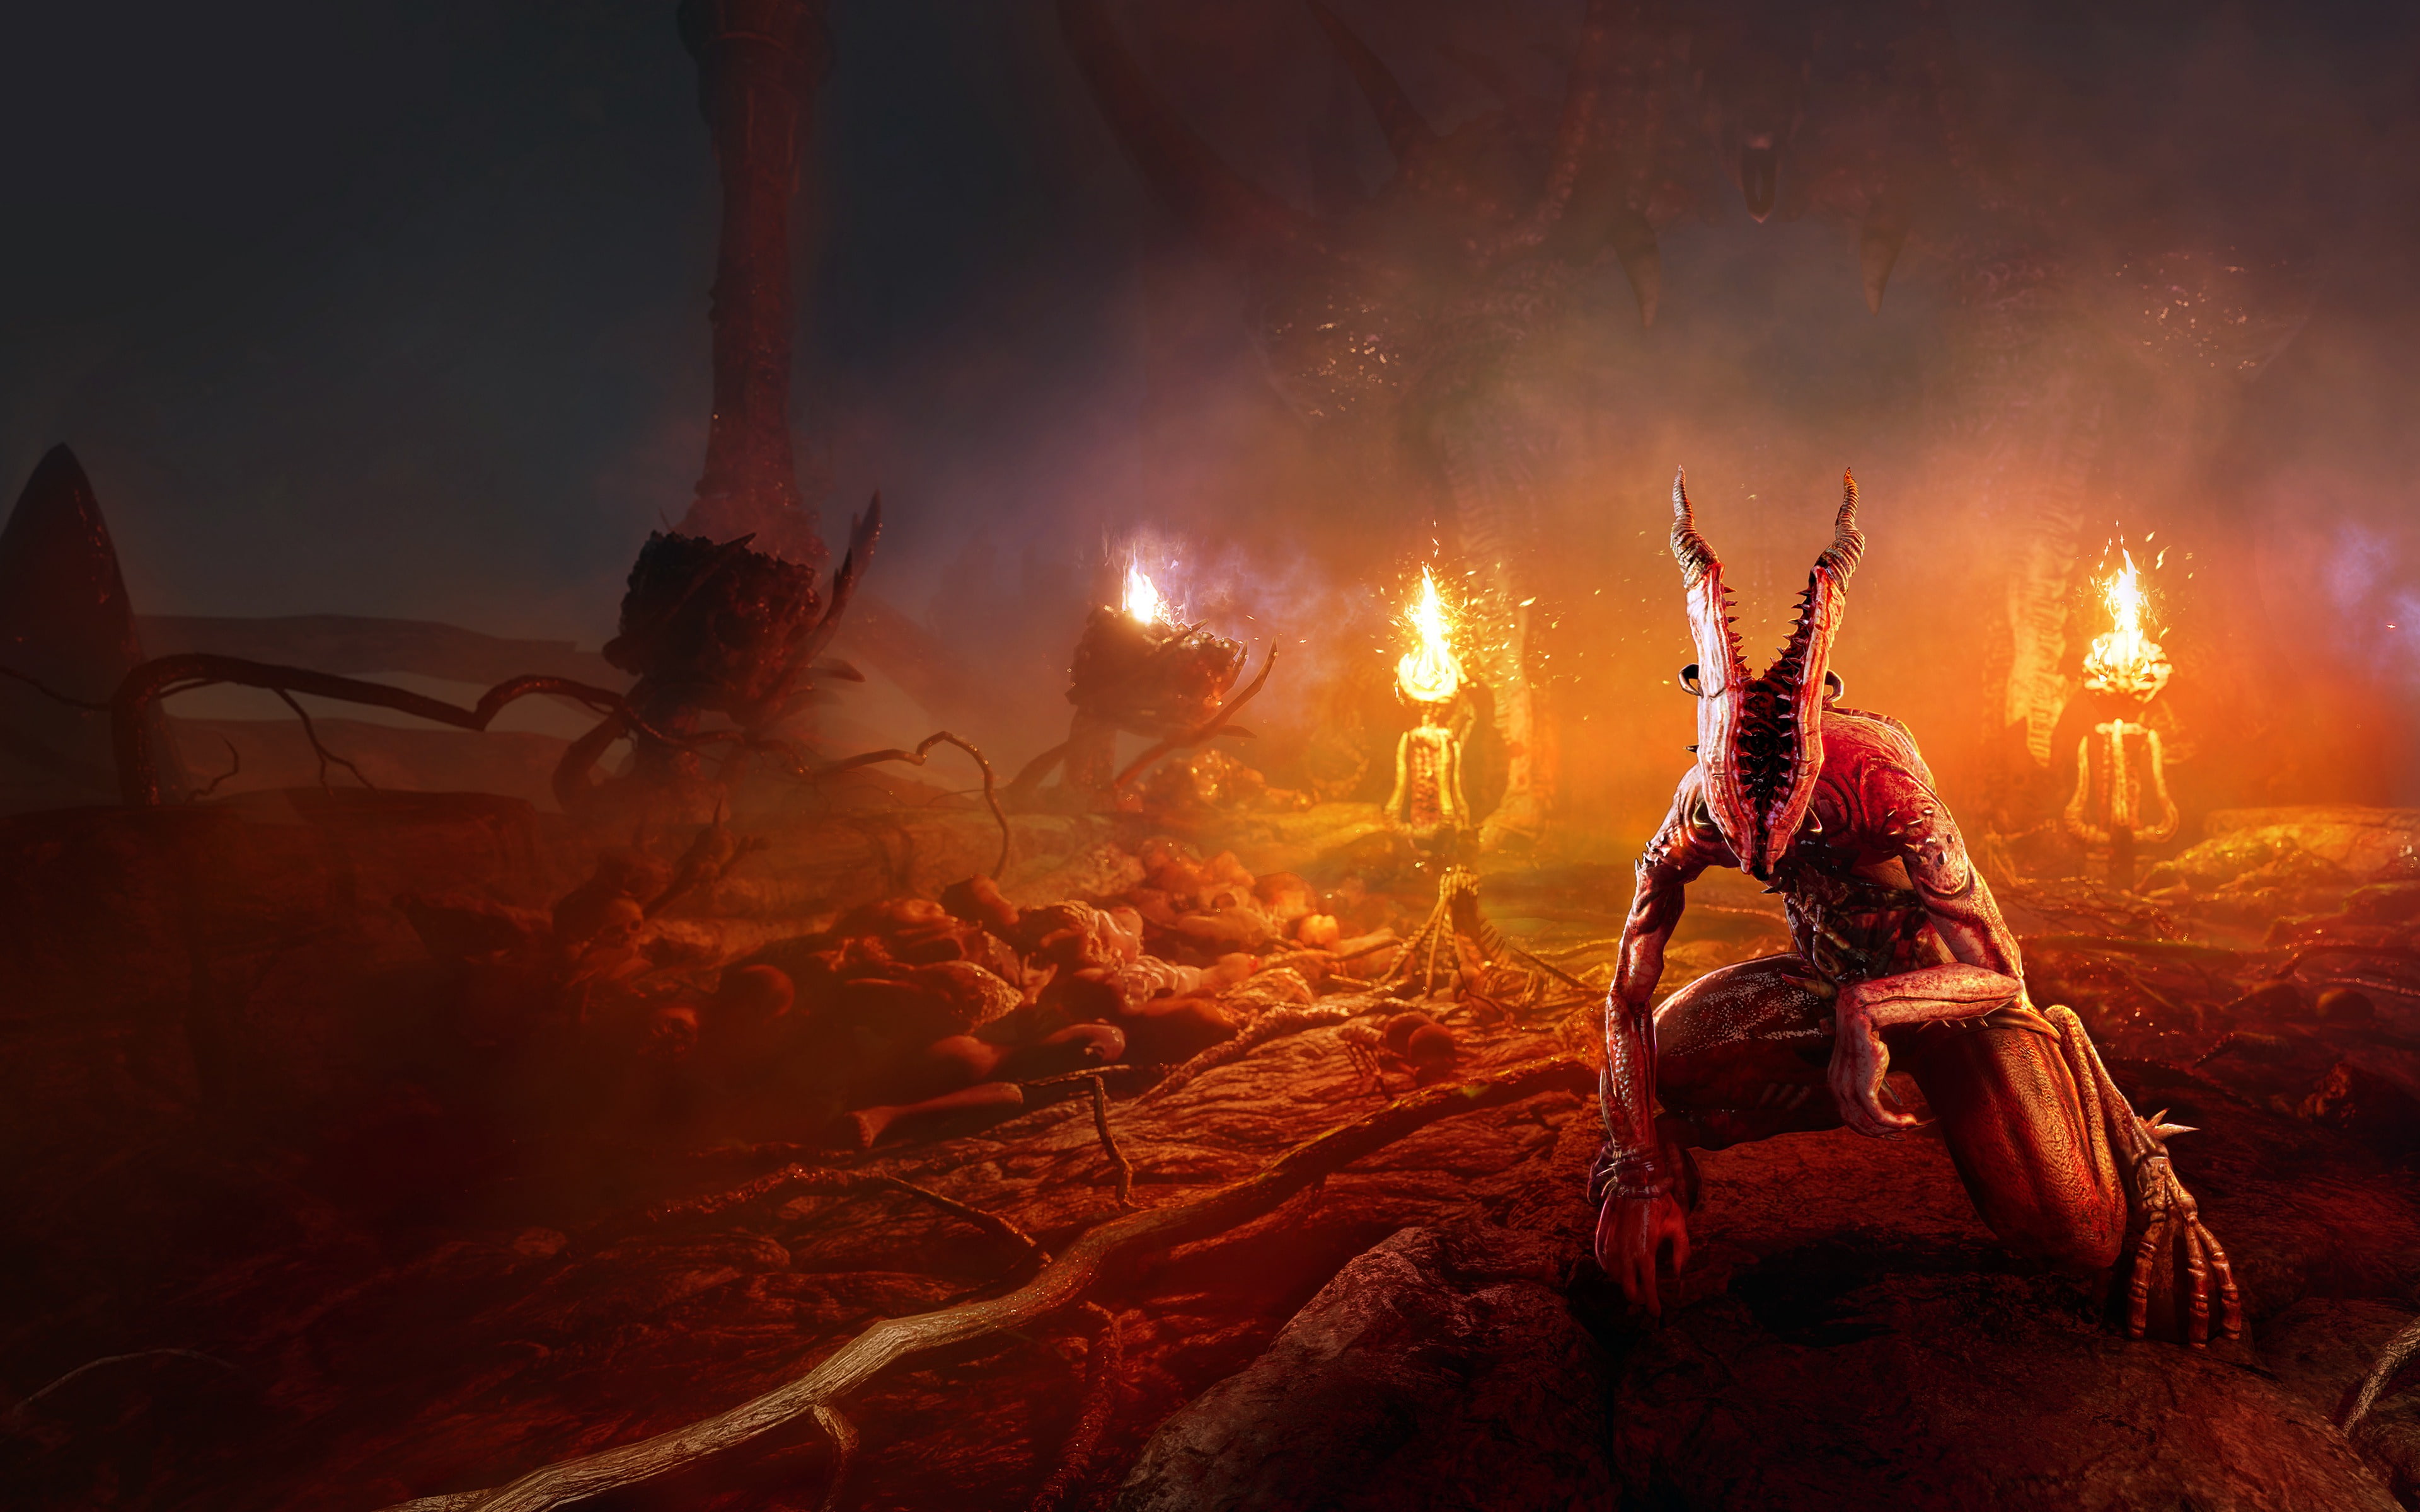 Agony 2018 HD 4K Game Poster, red monster wallpaper, burning